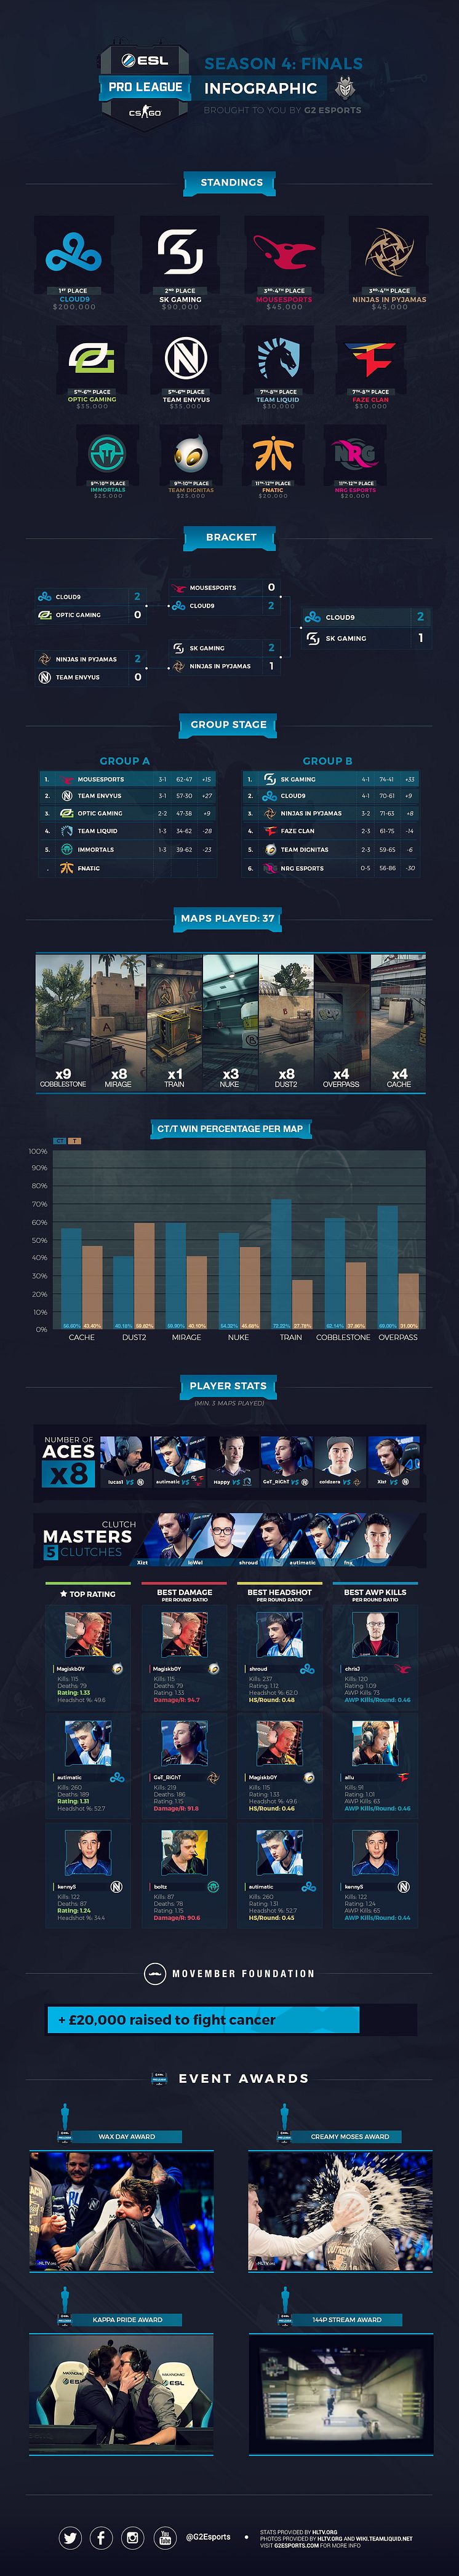 ESL Pro League Season 4 Infographic